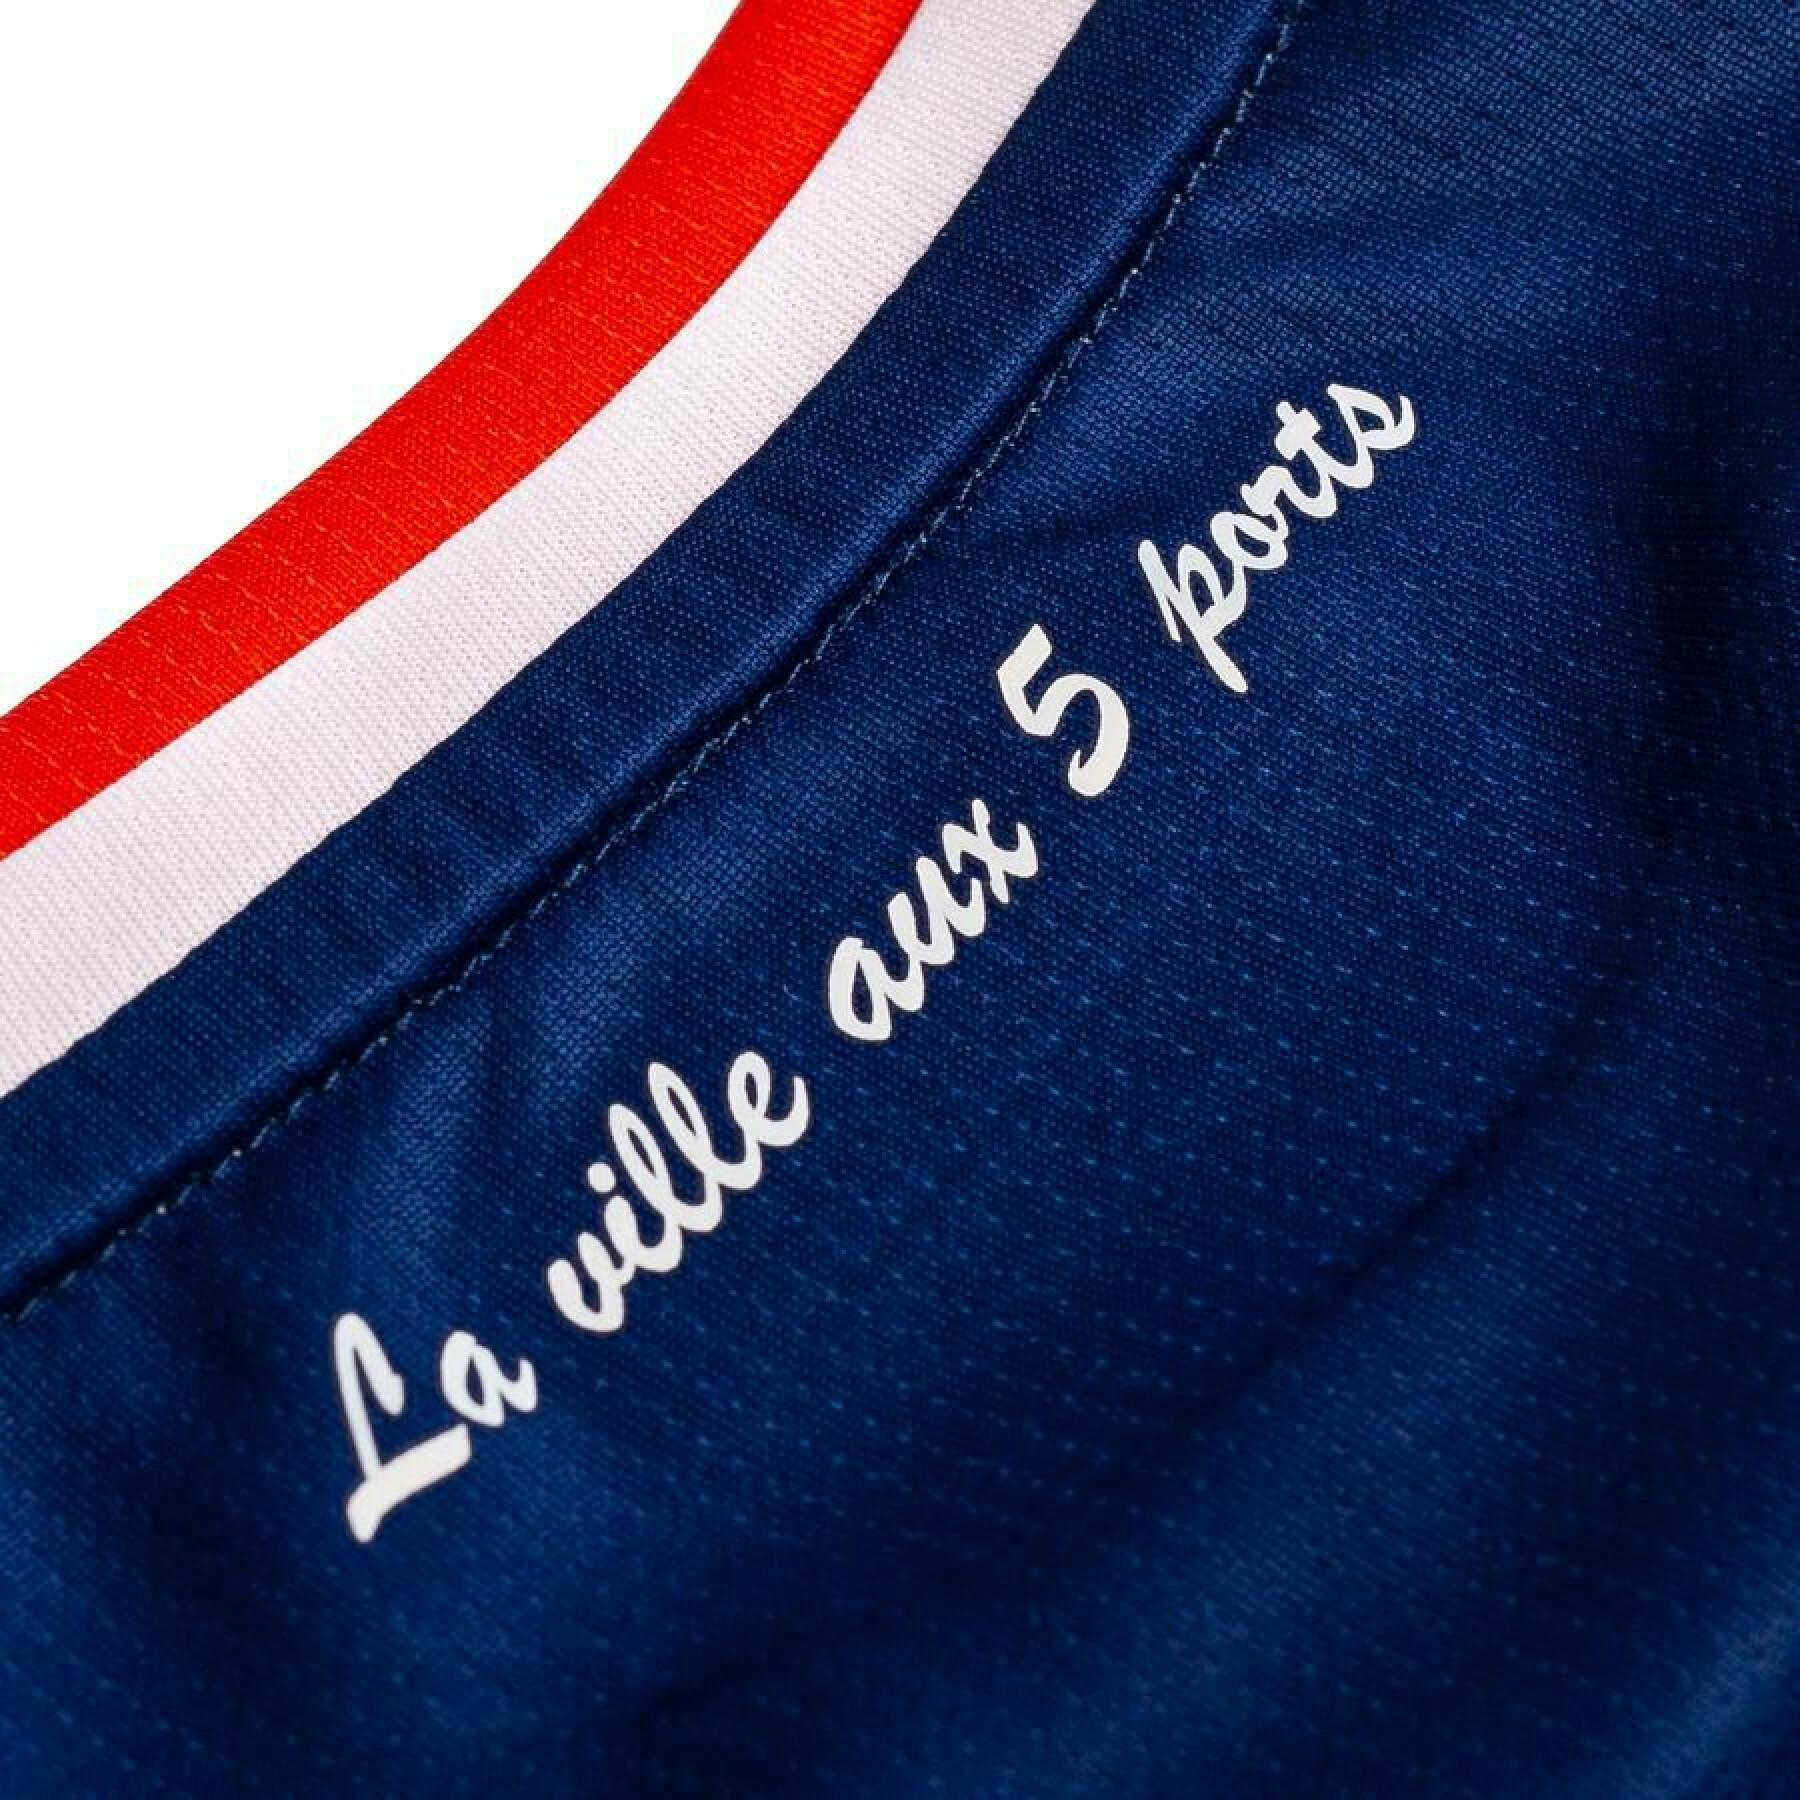 Trzecia koszulka FC Lorient 2021/22